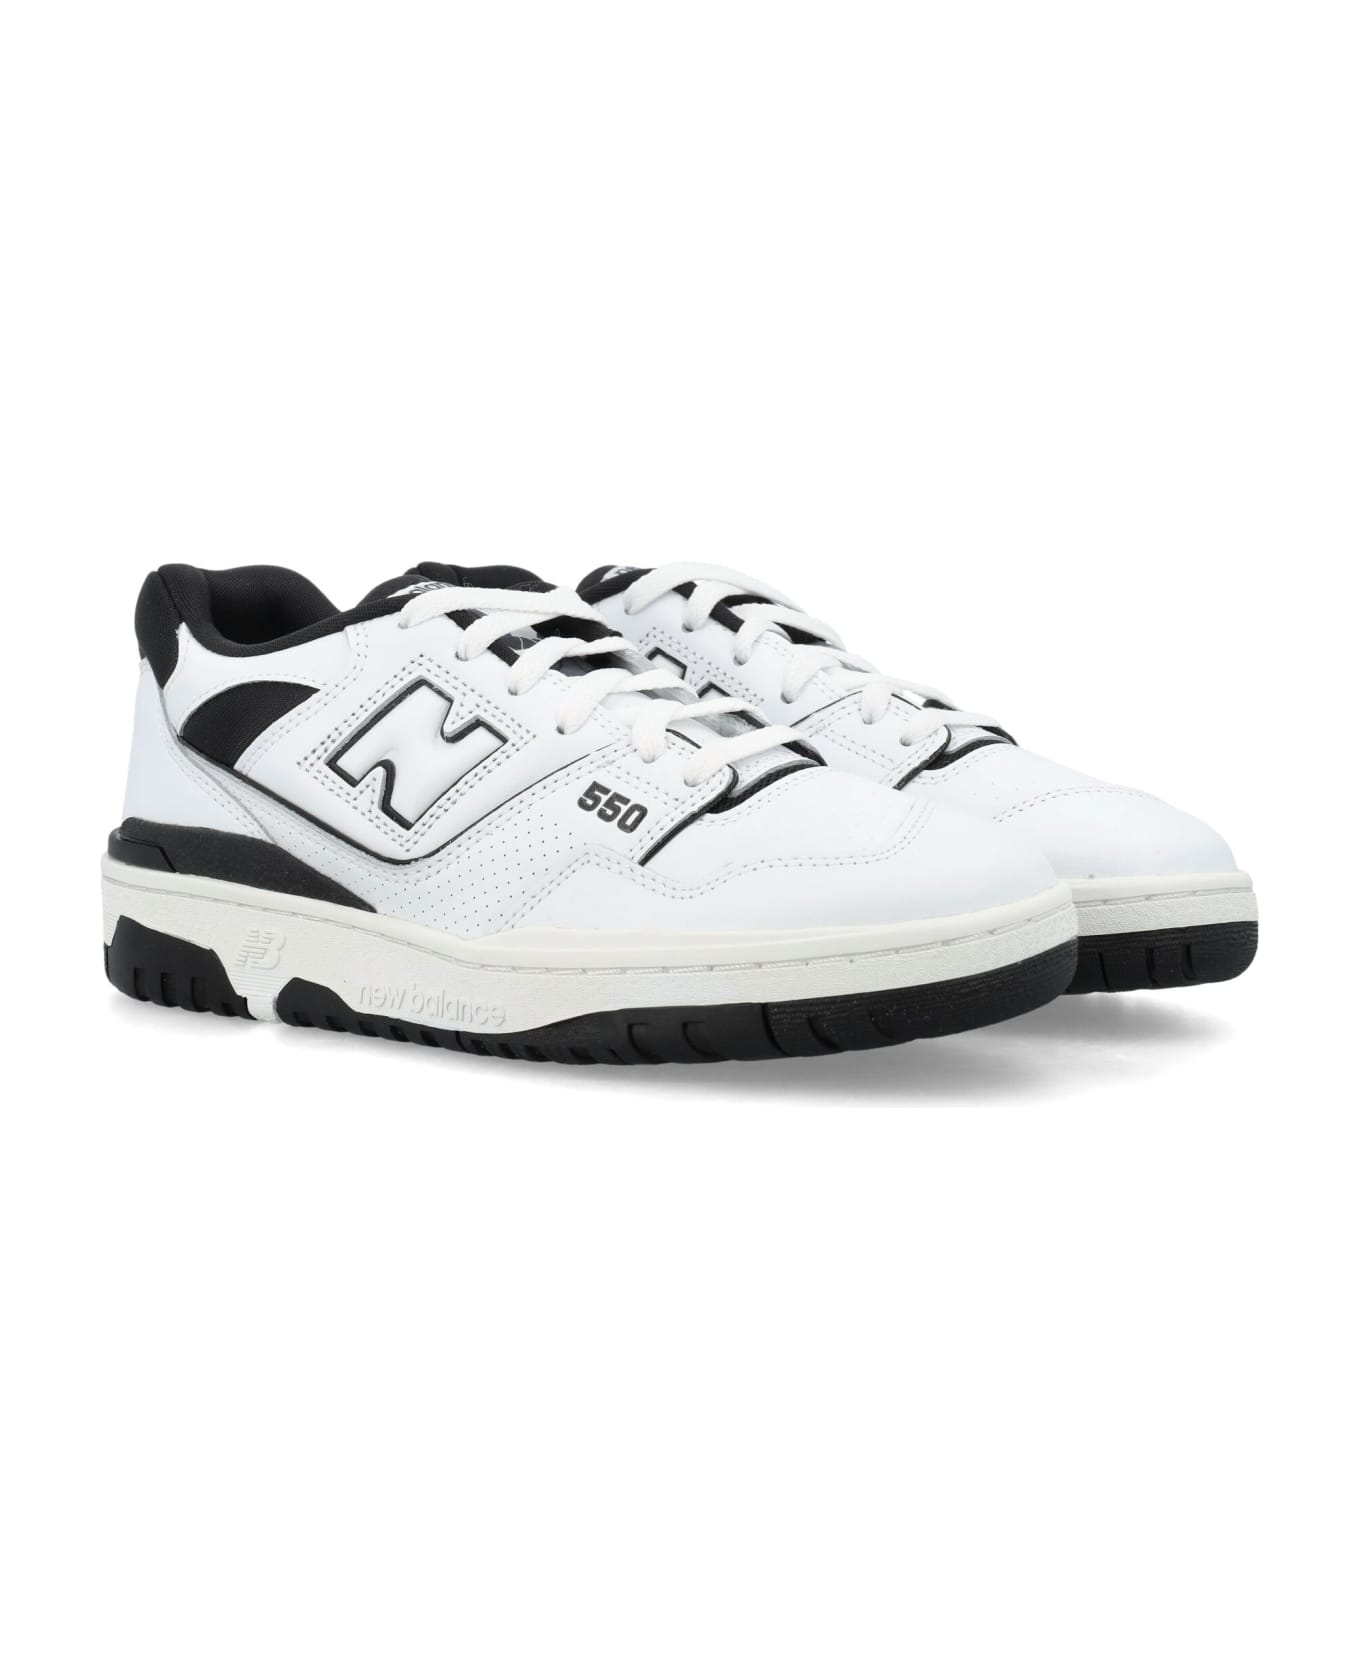 New Balance Bb550 Sneakers - WHITE BLACK